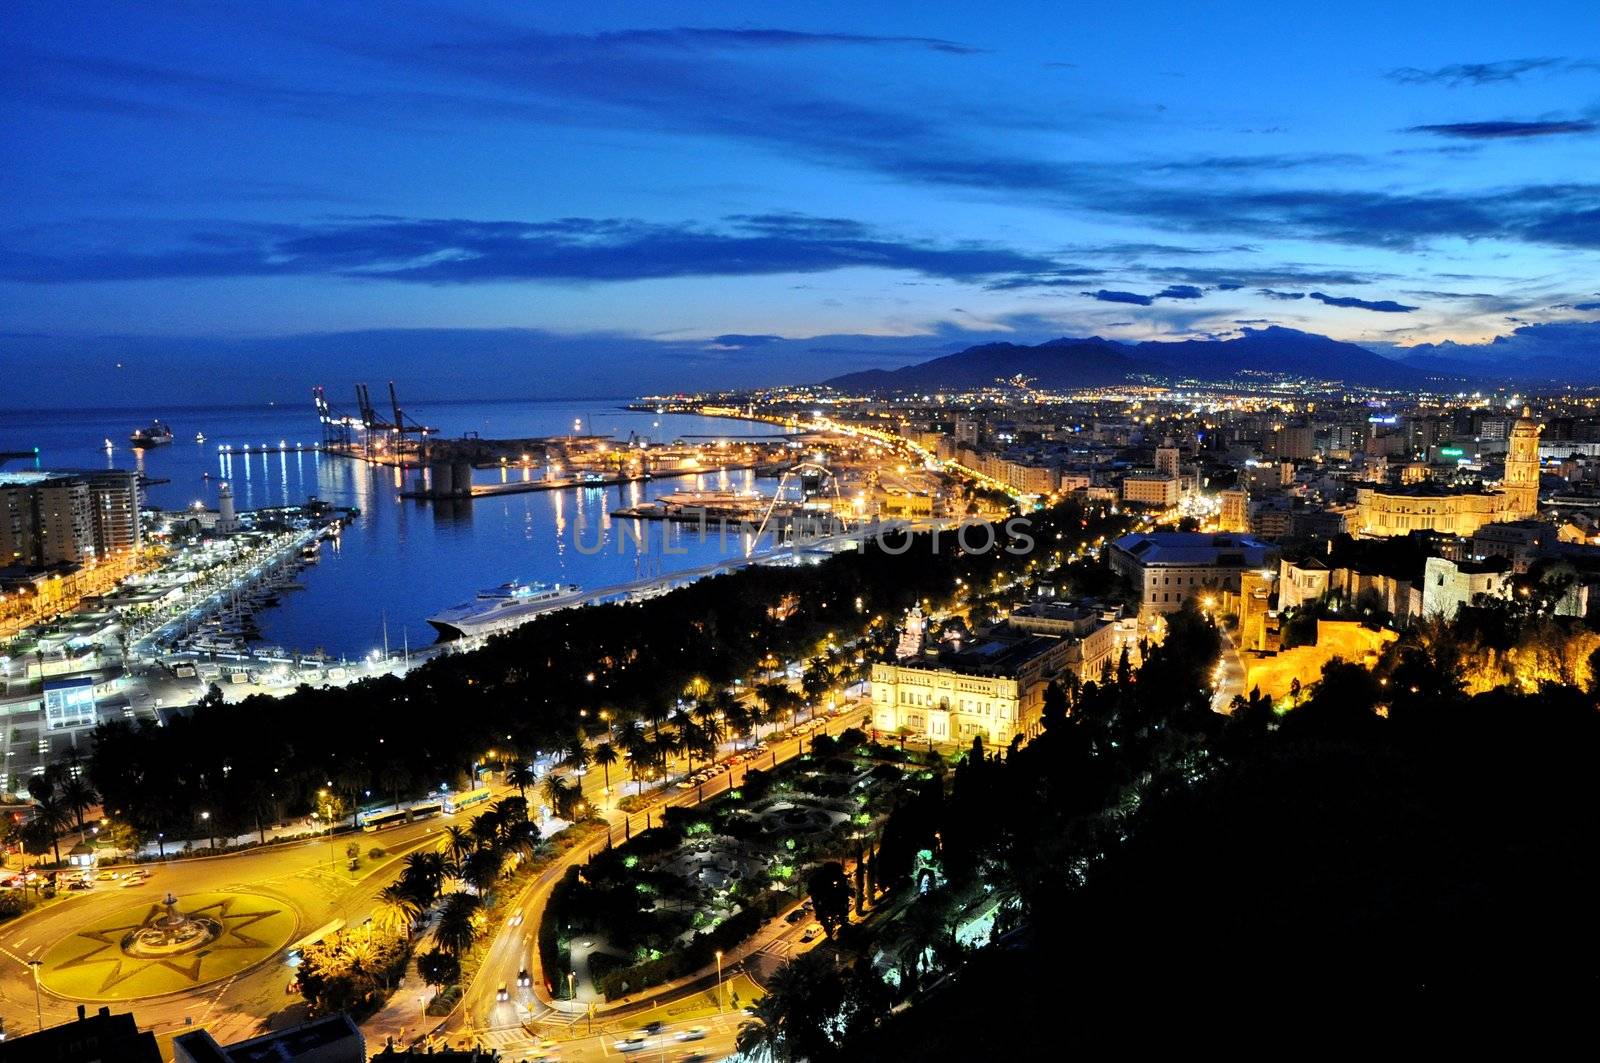 City of Malga, Spain by night by anderm